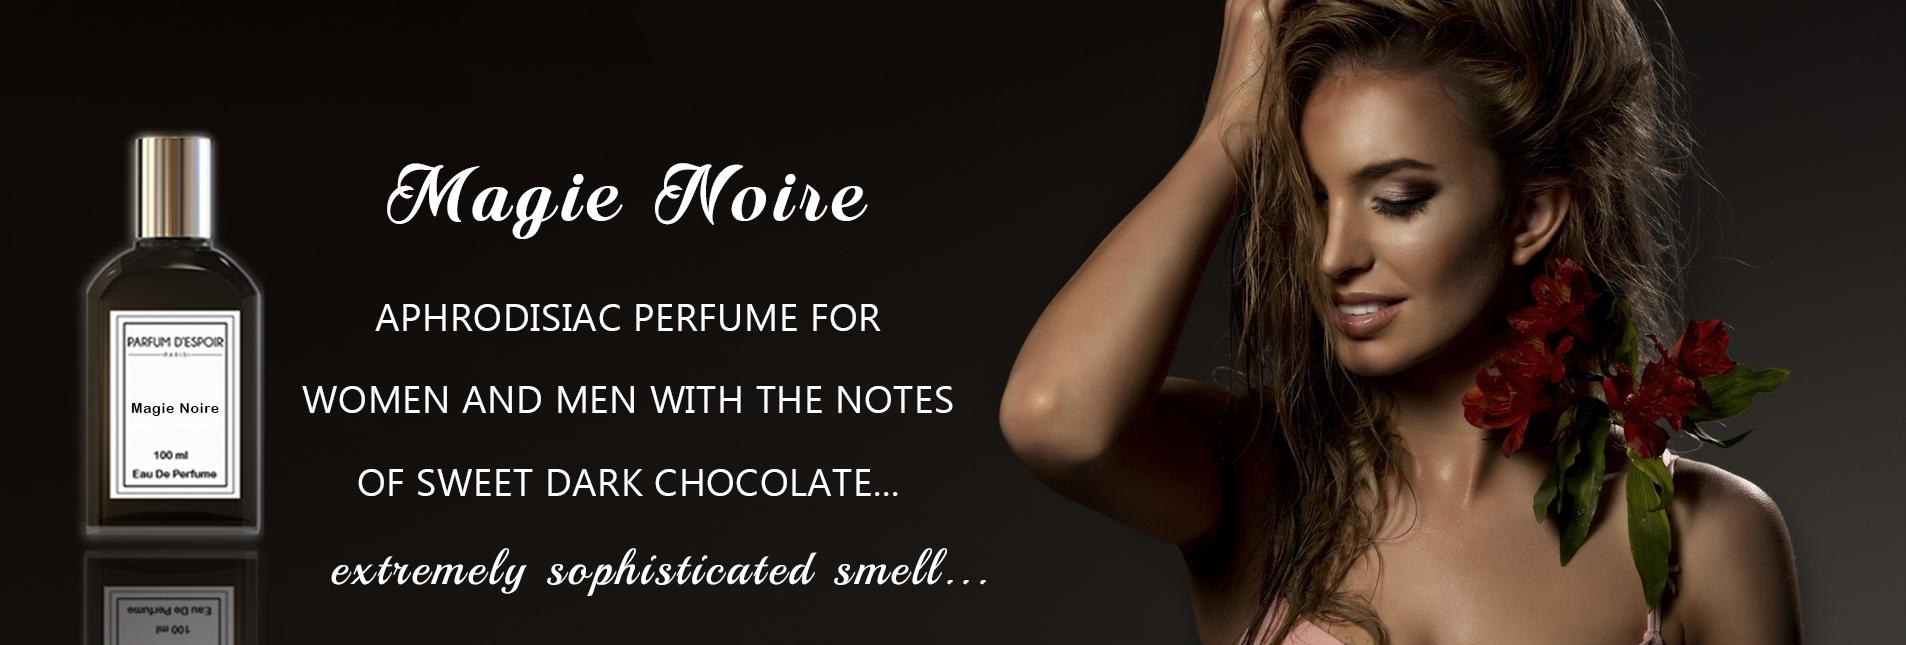 Magie Noire - aphrodisiac perfume with chocolate notes - Parfum D'espoir - France